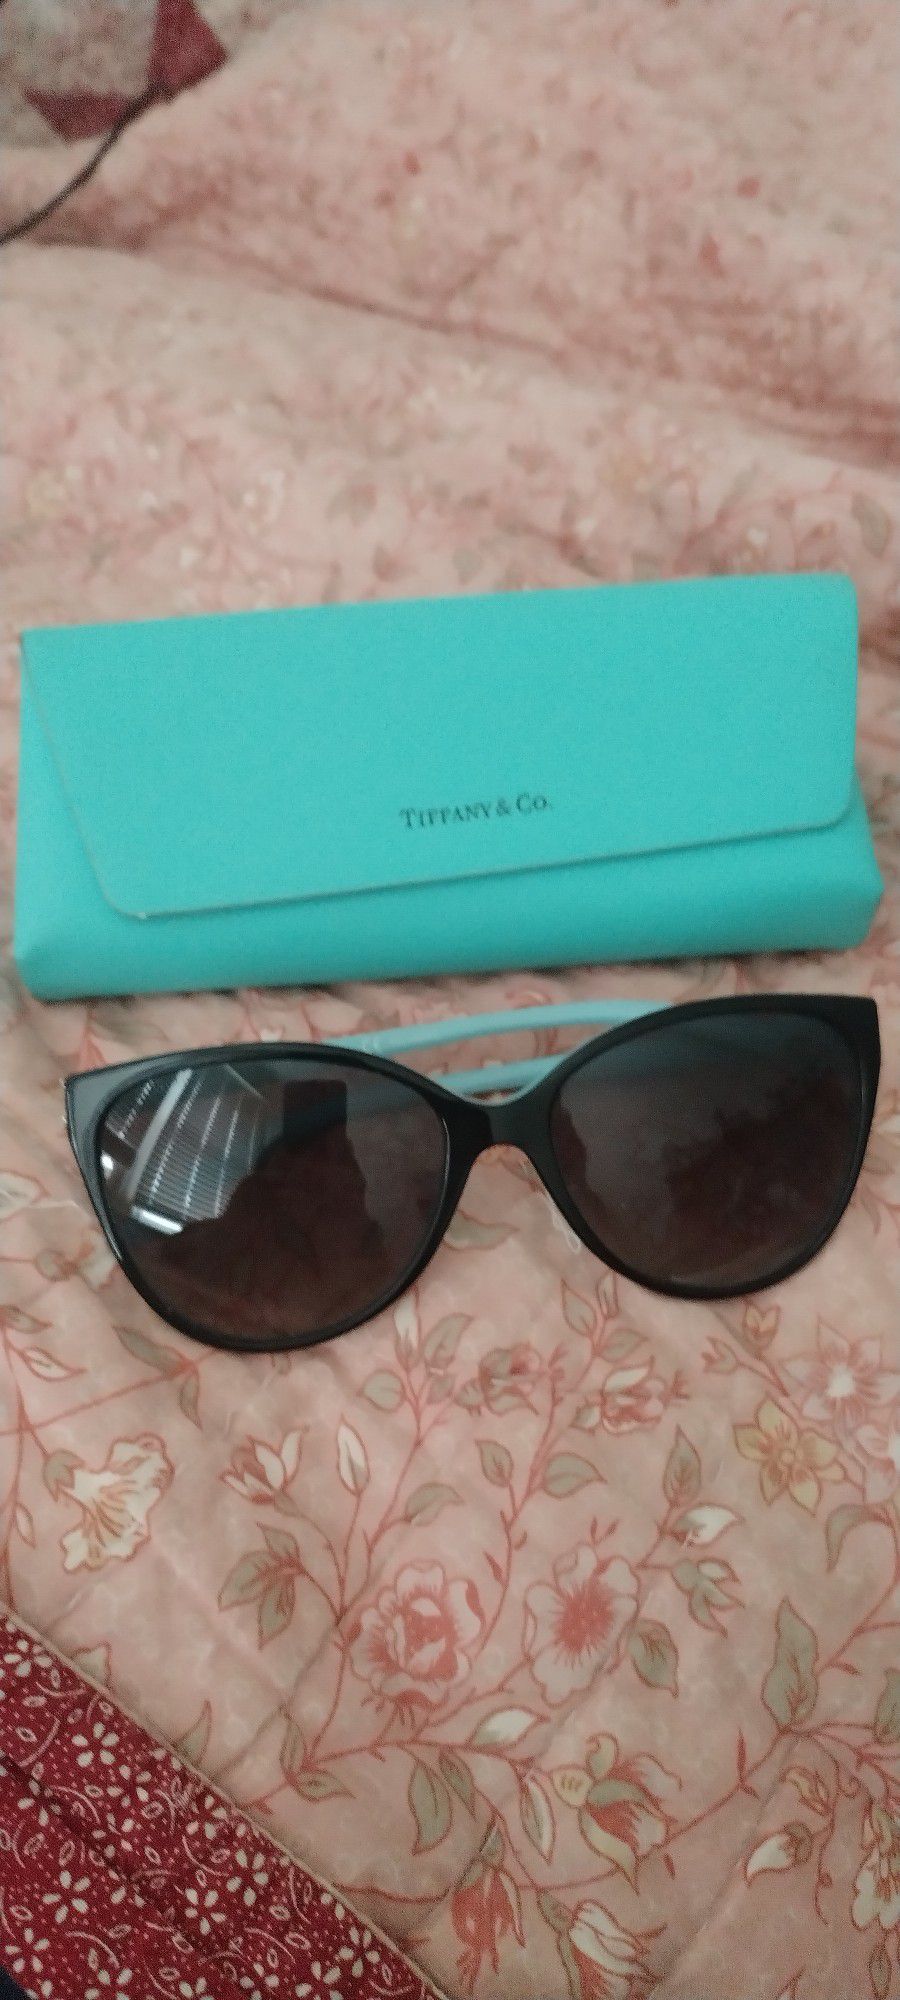 Tiffany & Co. Sunglasses and Case